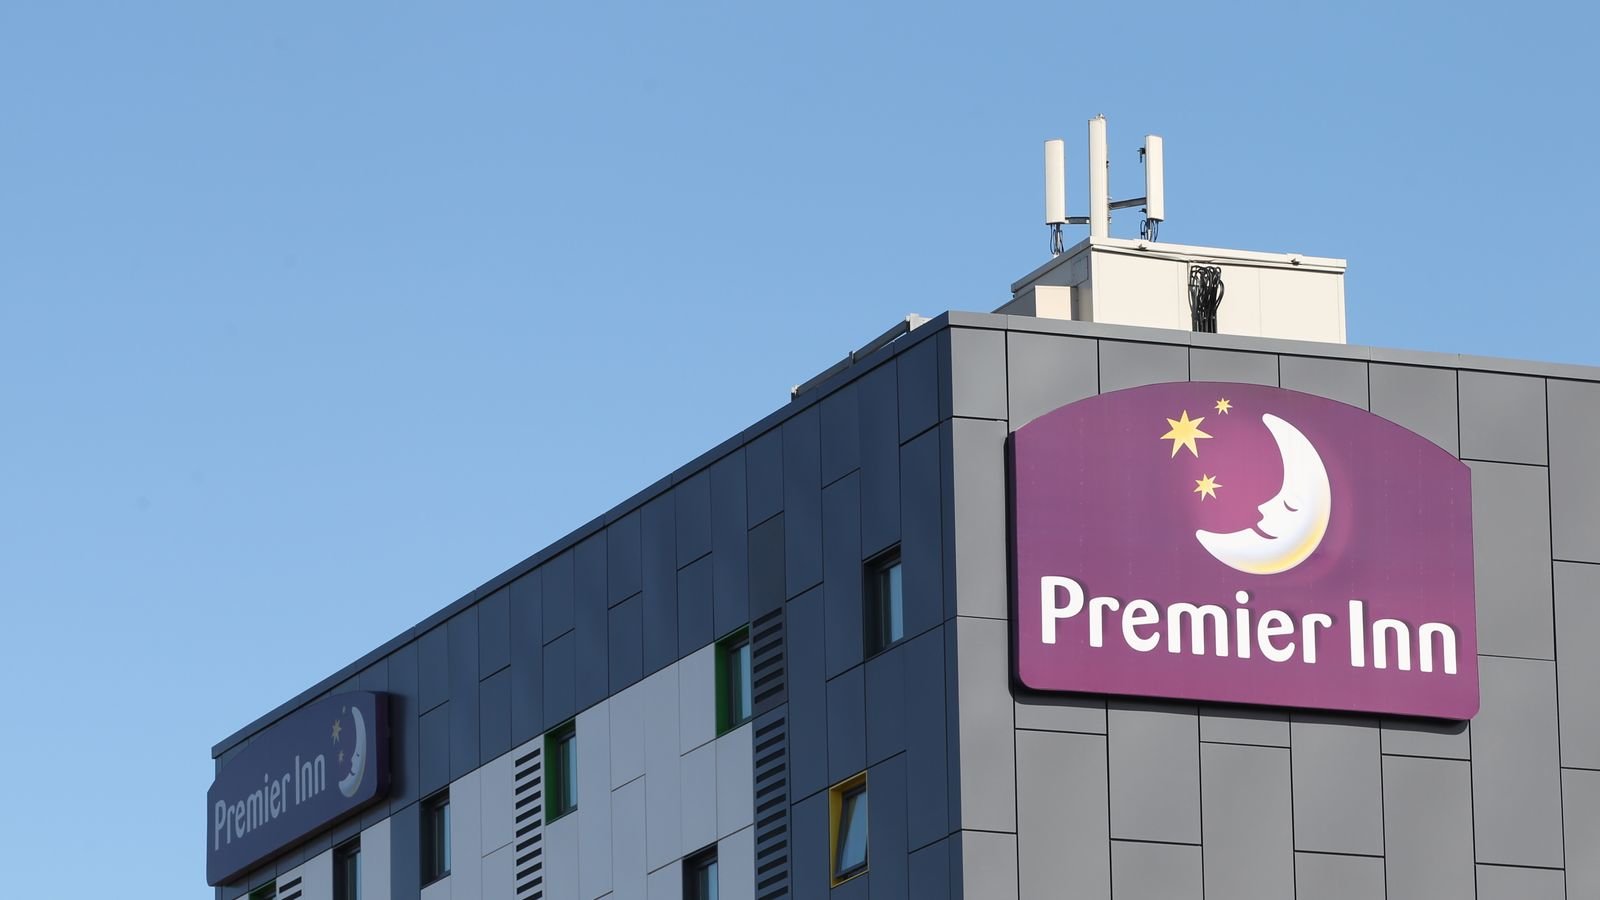 Premier Inn Faces Advertising Ban for Misleading £35 Room Rates